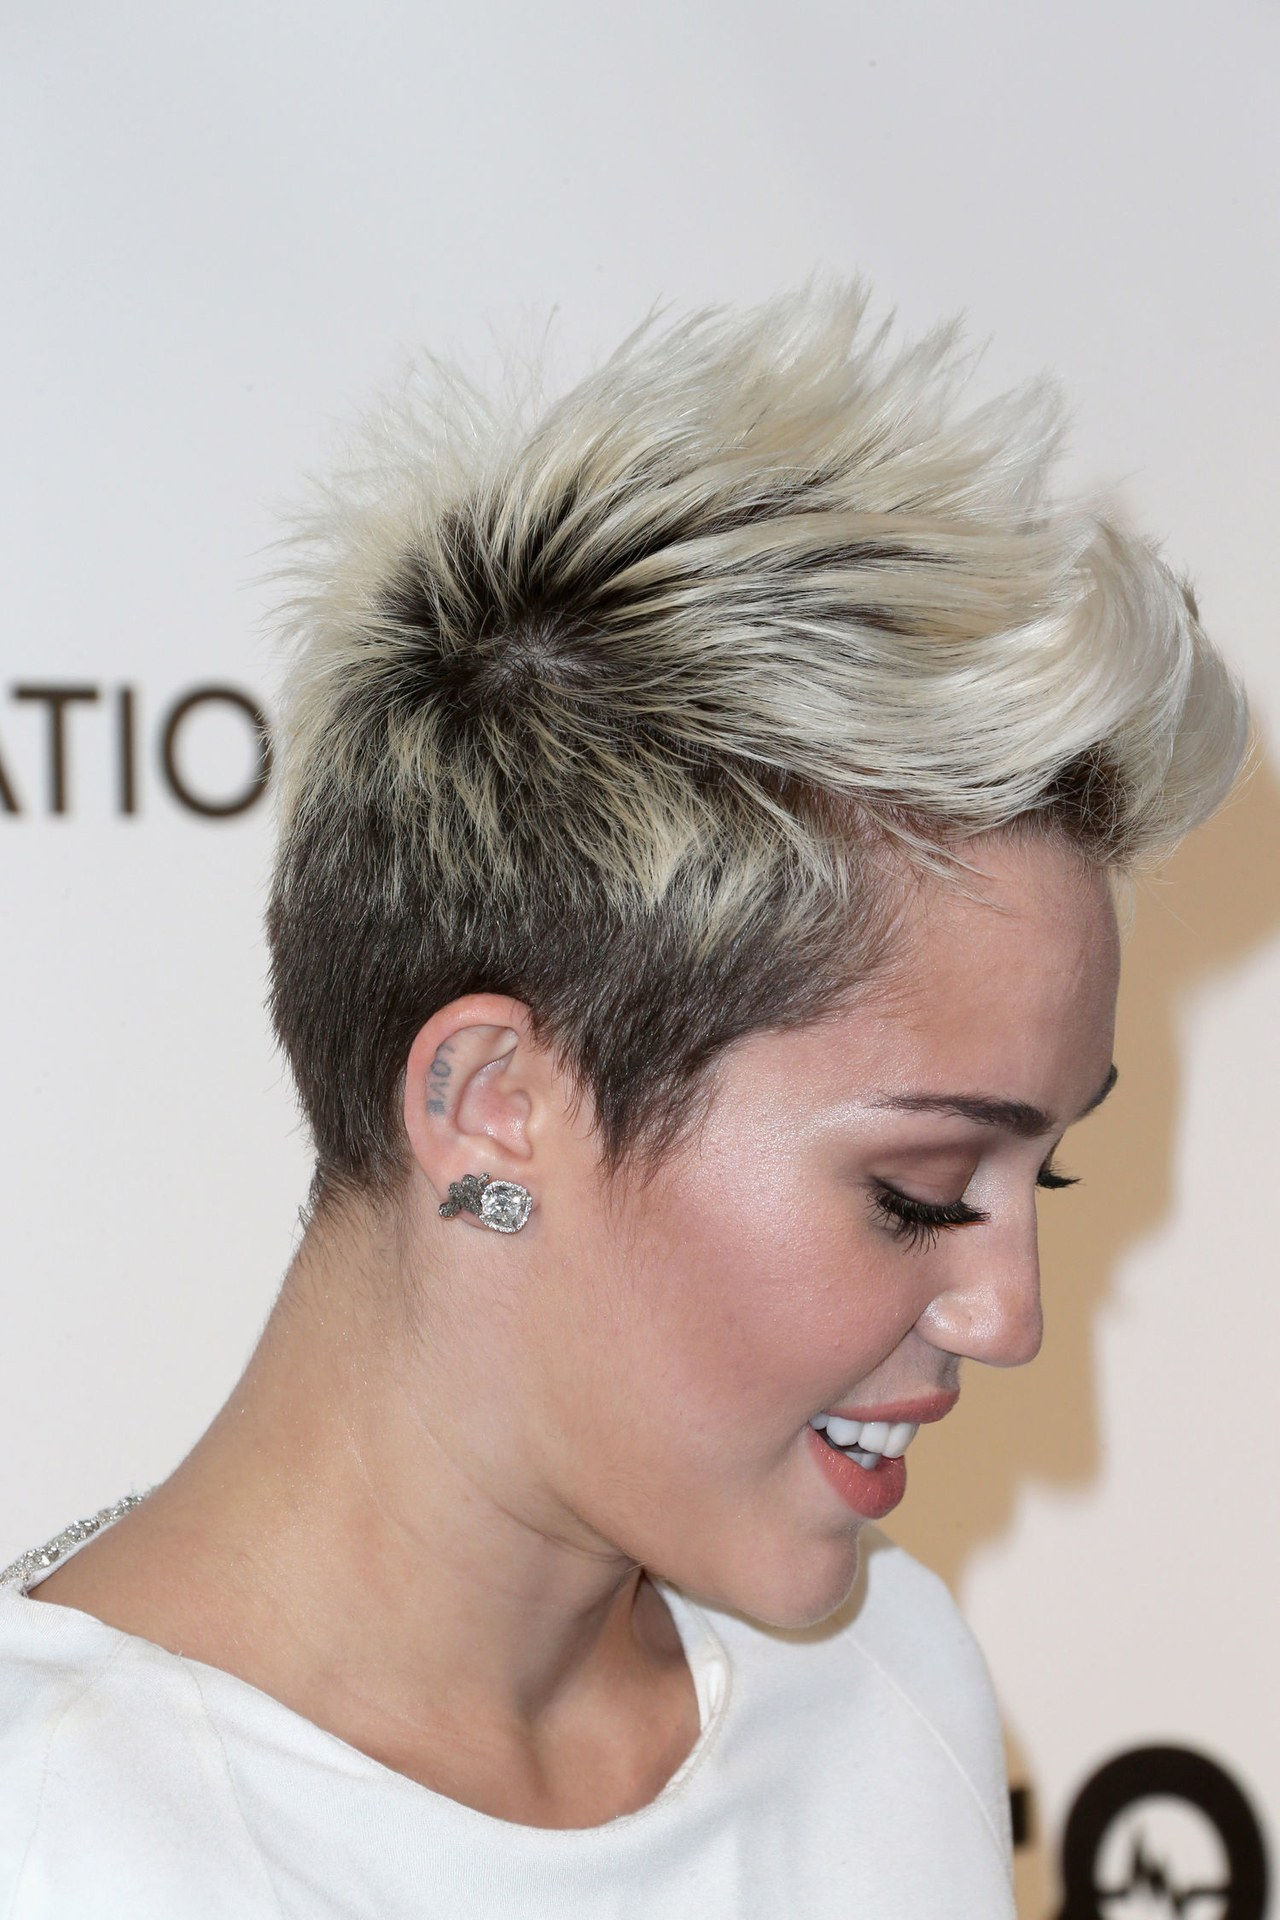 Miley cyrus spiky short hair